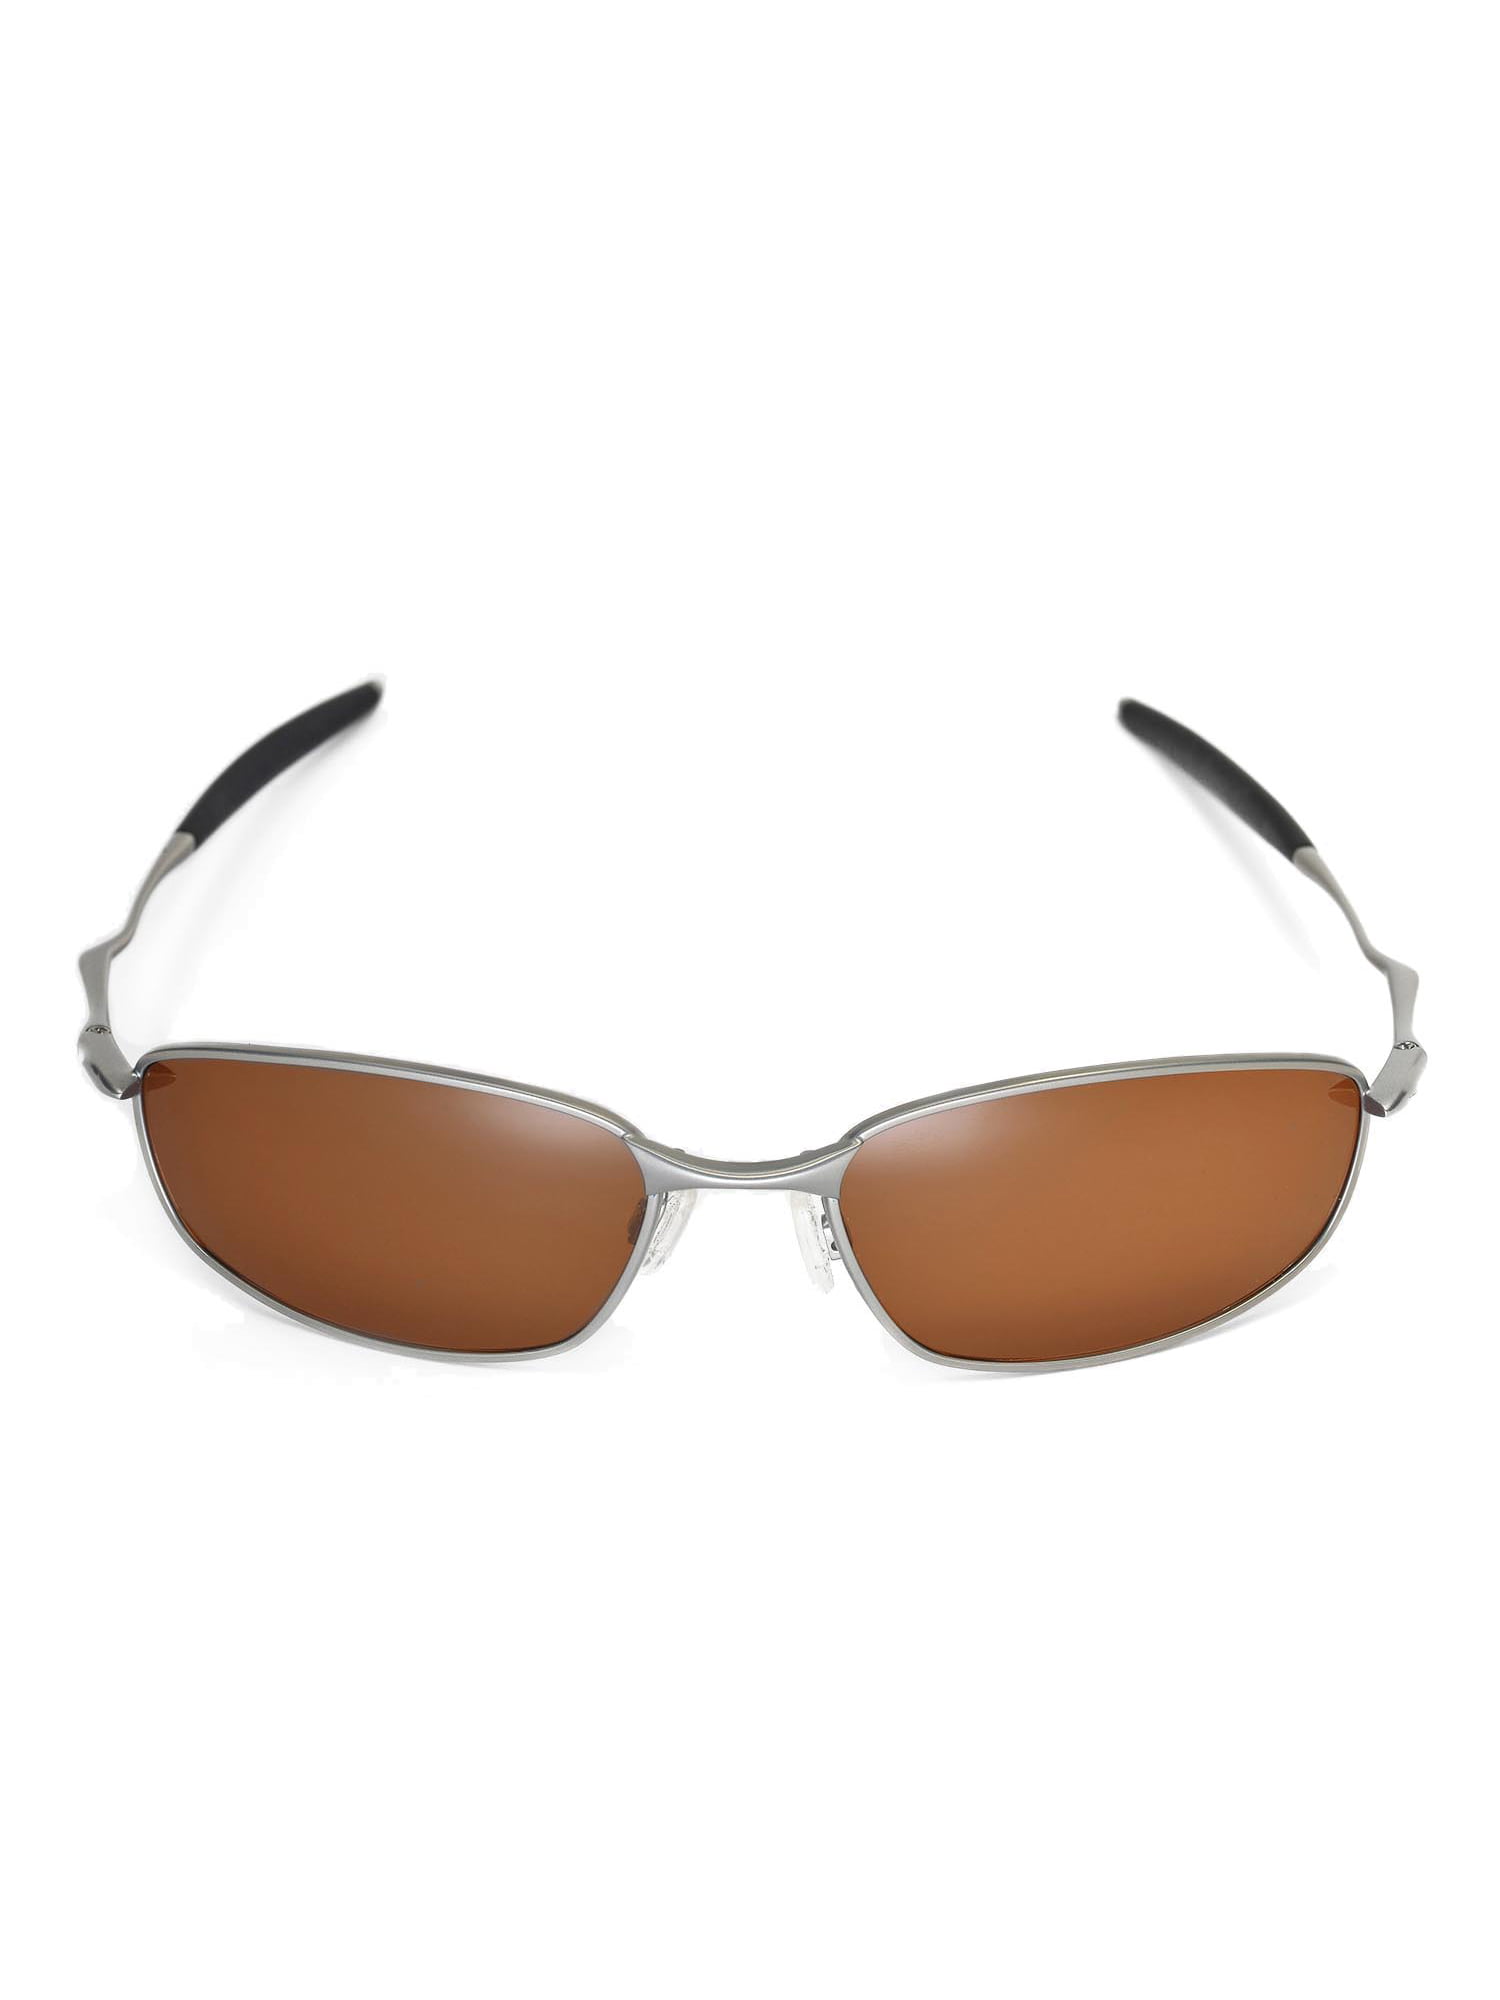 Walleva Titanium Polarized Replacement Lenses for Oakley Whisker Sunglasses  